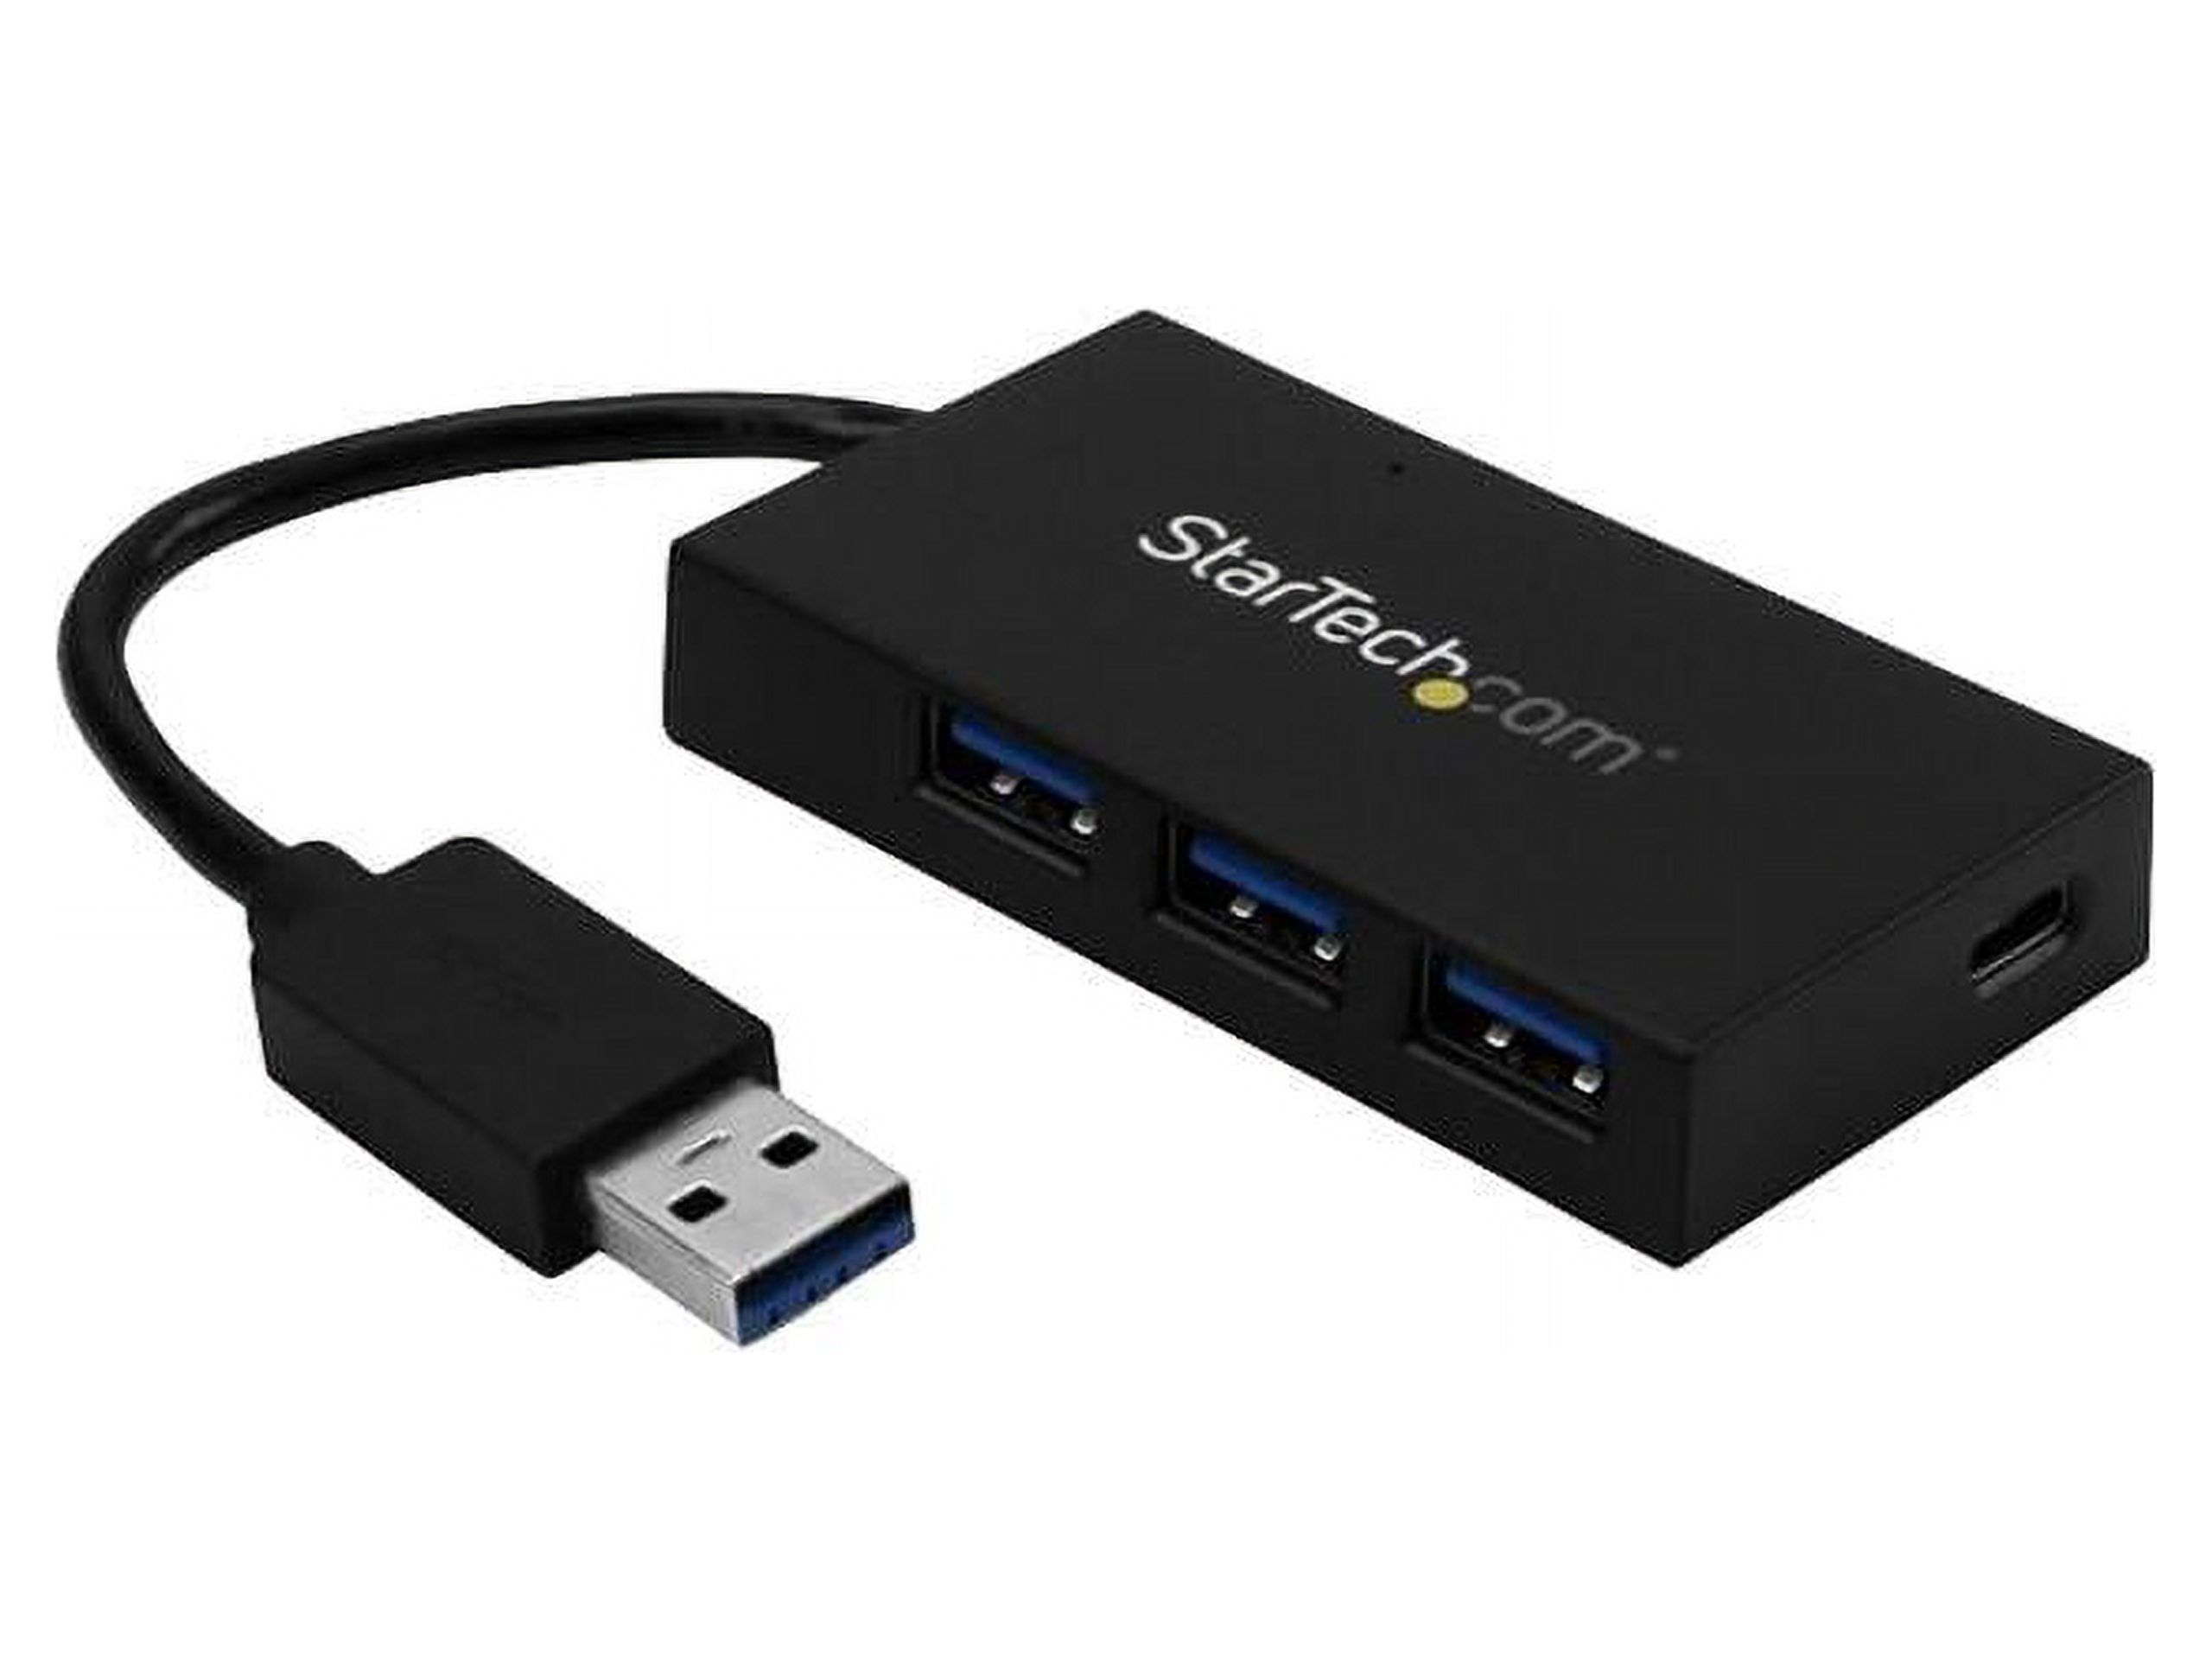 StarTech HB30A3A1CSFS 4 Port USB Hub - USB 3.0 - USB A to 3 x USB A and 1 x USB C - Includes Power Adapter - USB Port Expander - USB Port Hub - image 1 of 5